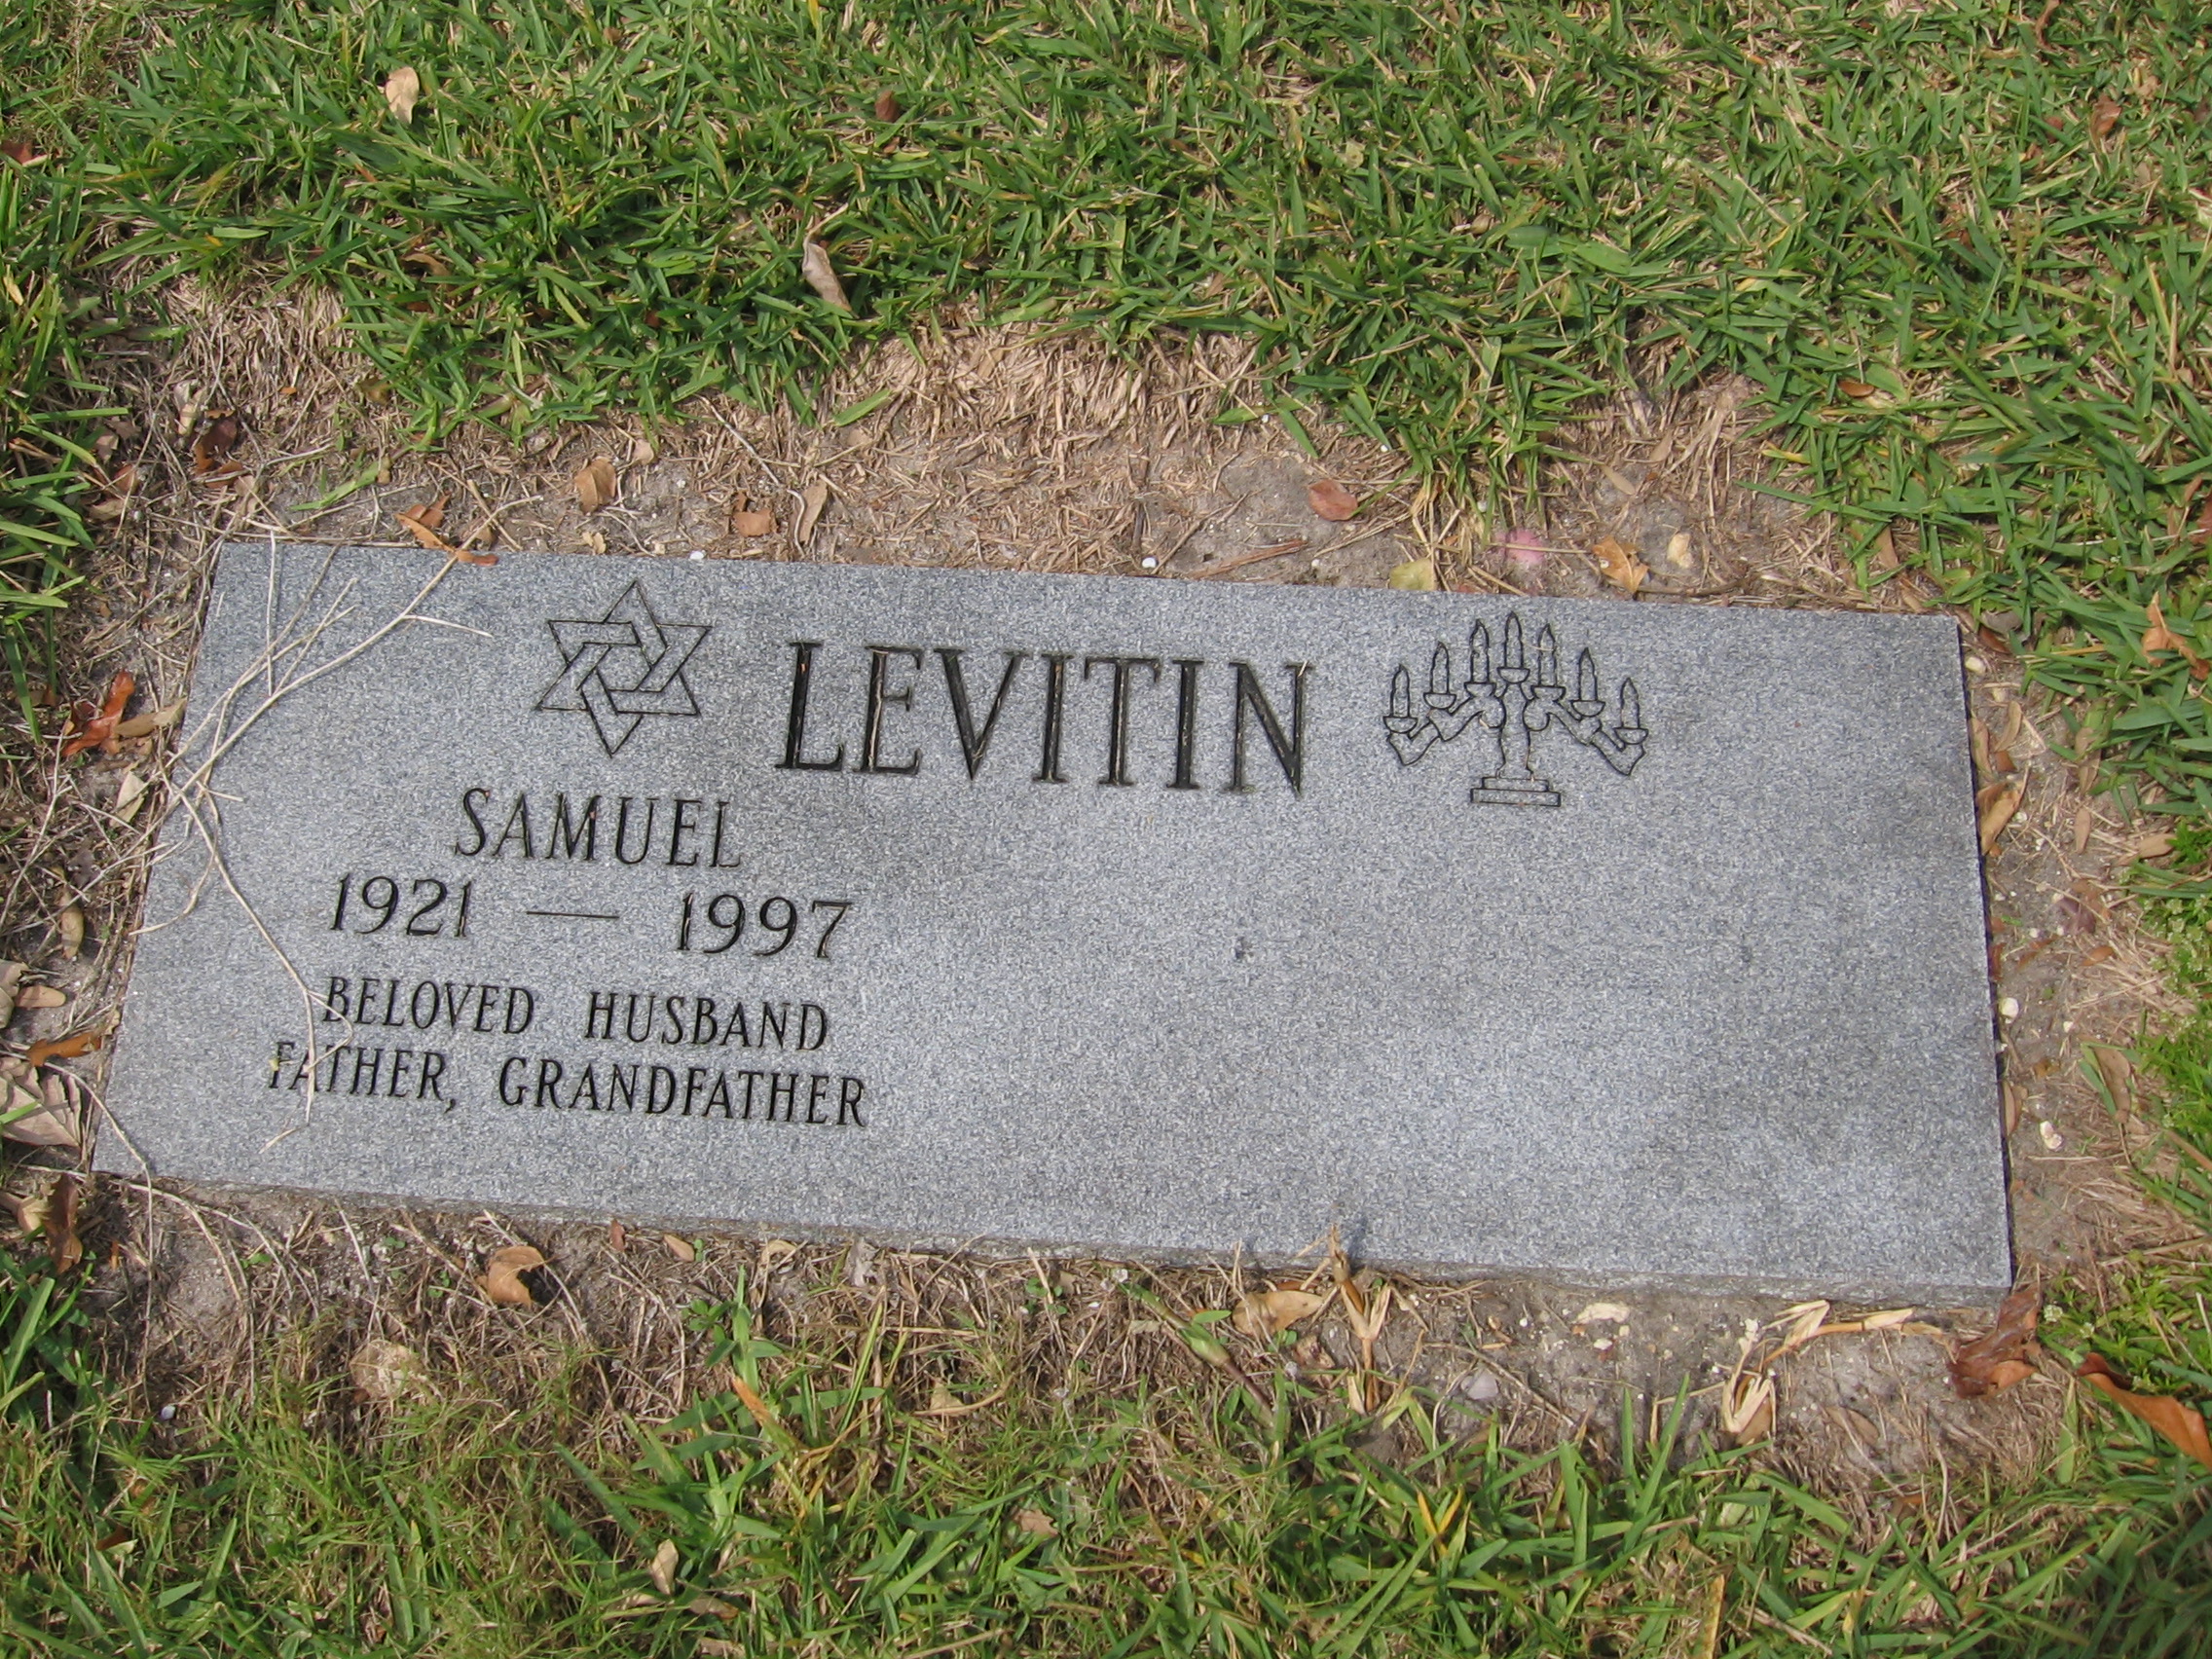 Samuel Levitin